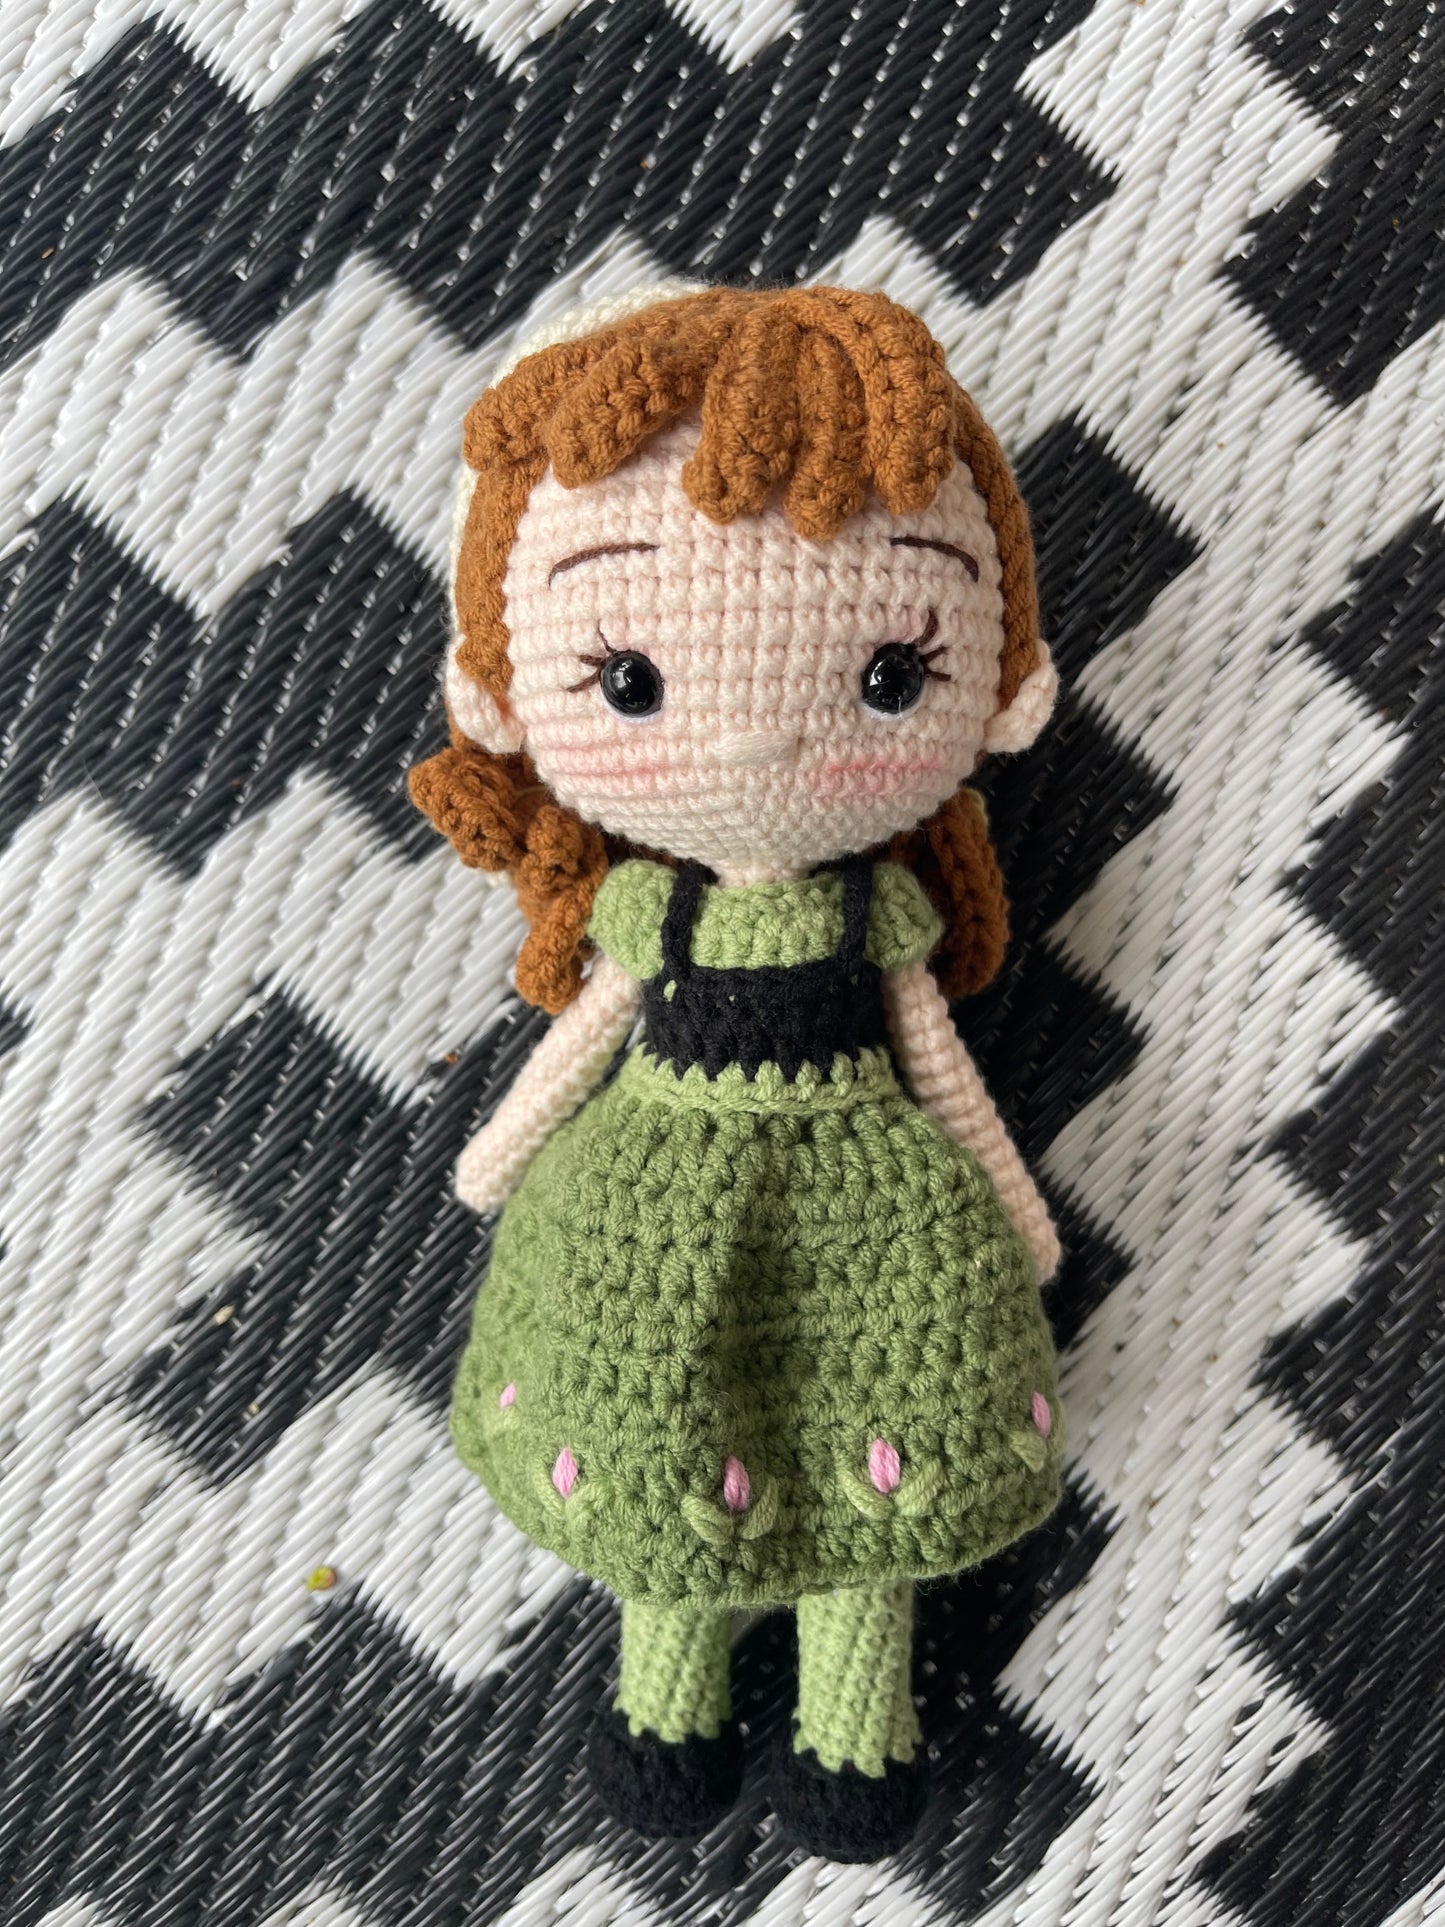 Princess Crochet Doll - Amigurumi Princess Dolls, Princess Gift Toy, Handmade Plush